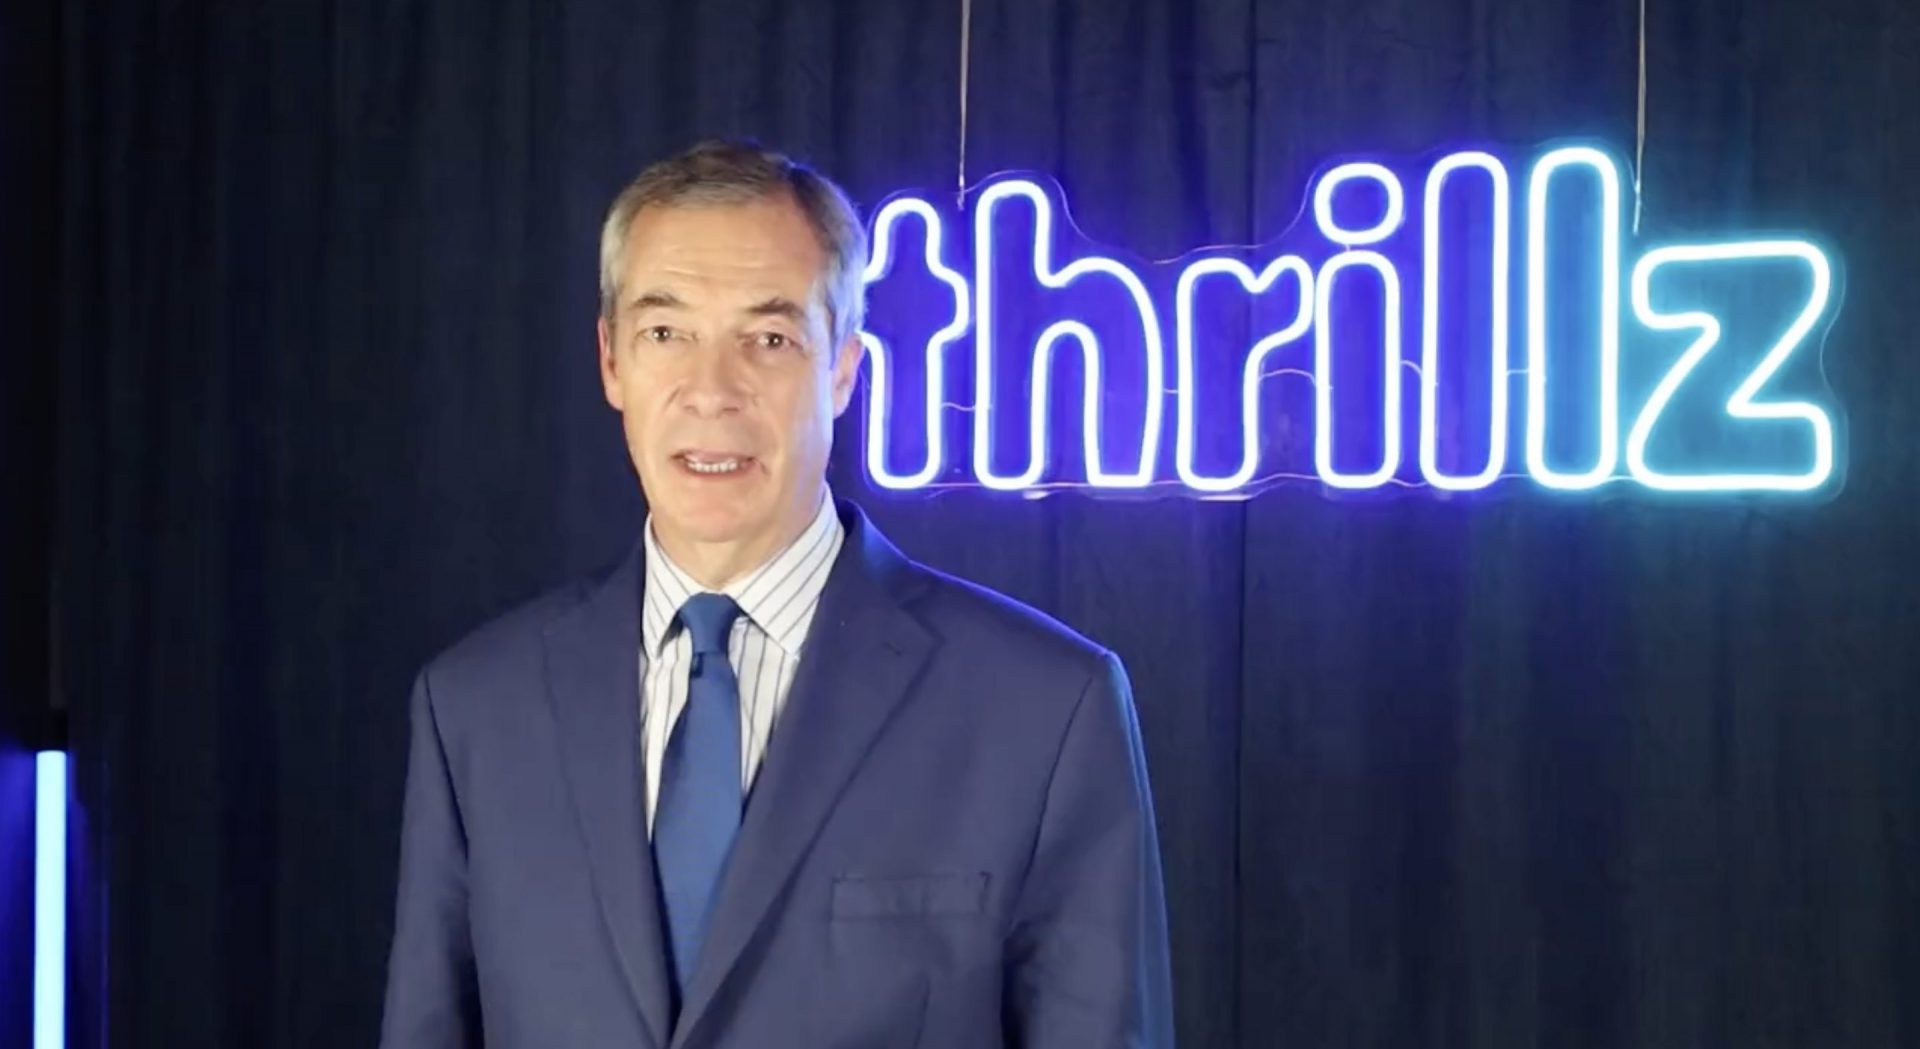 Nigel Farage, ora Mr. Brexit si dà ai video di auguri per San Valentino